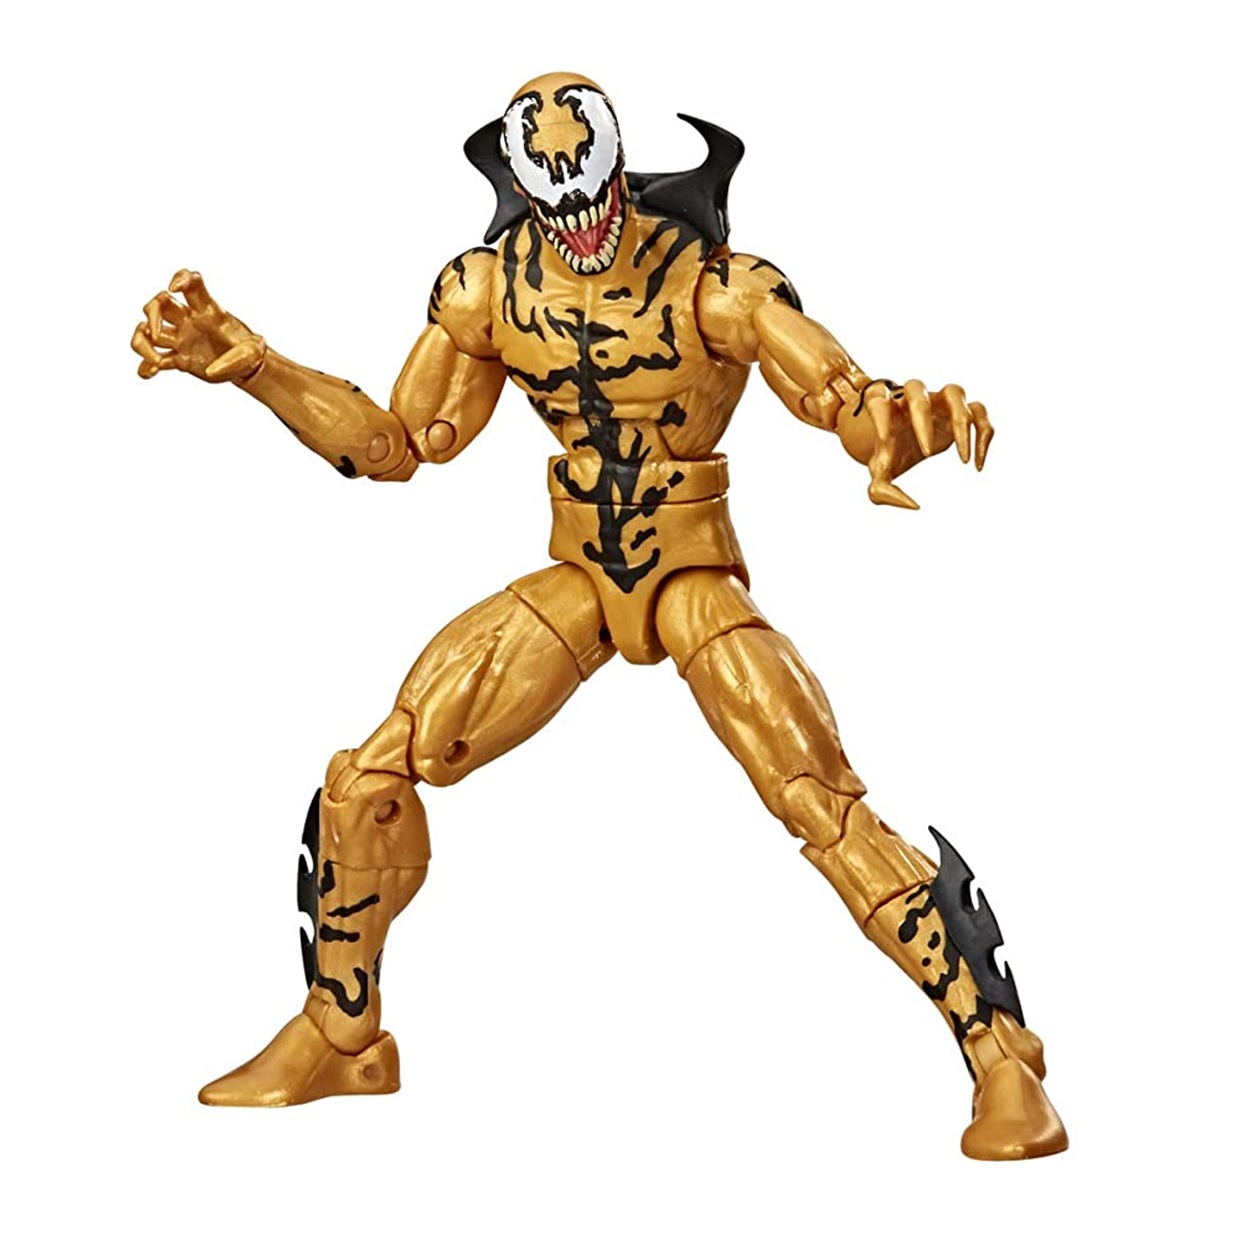 Phage Figura Spider Man B A F Venompool Maximum Venom